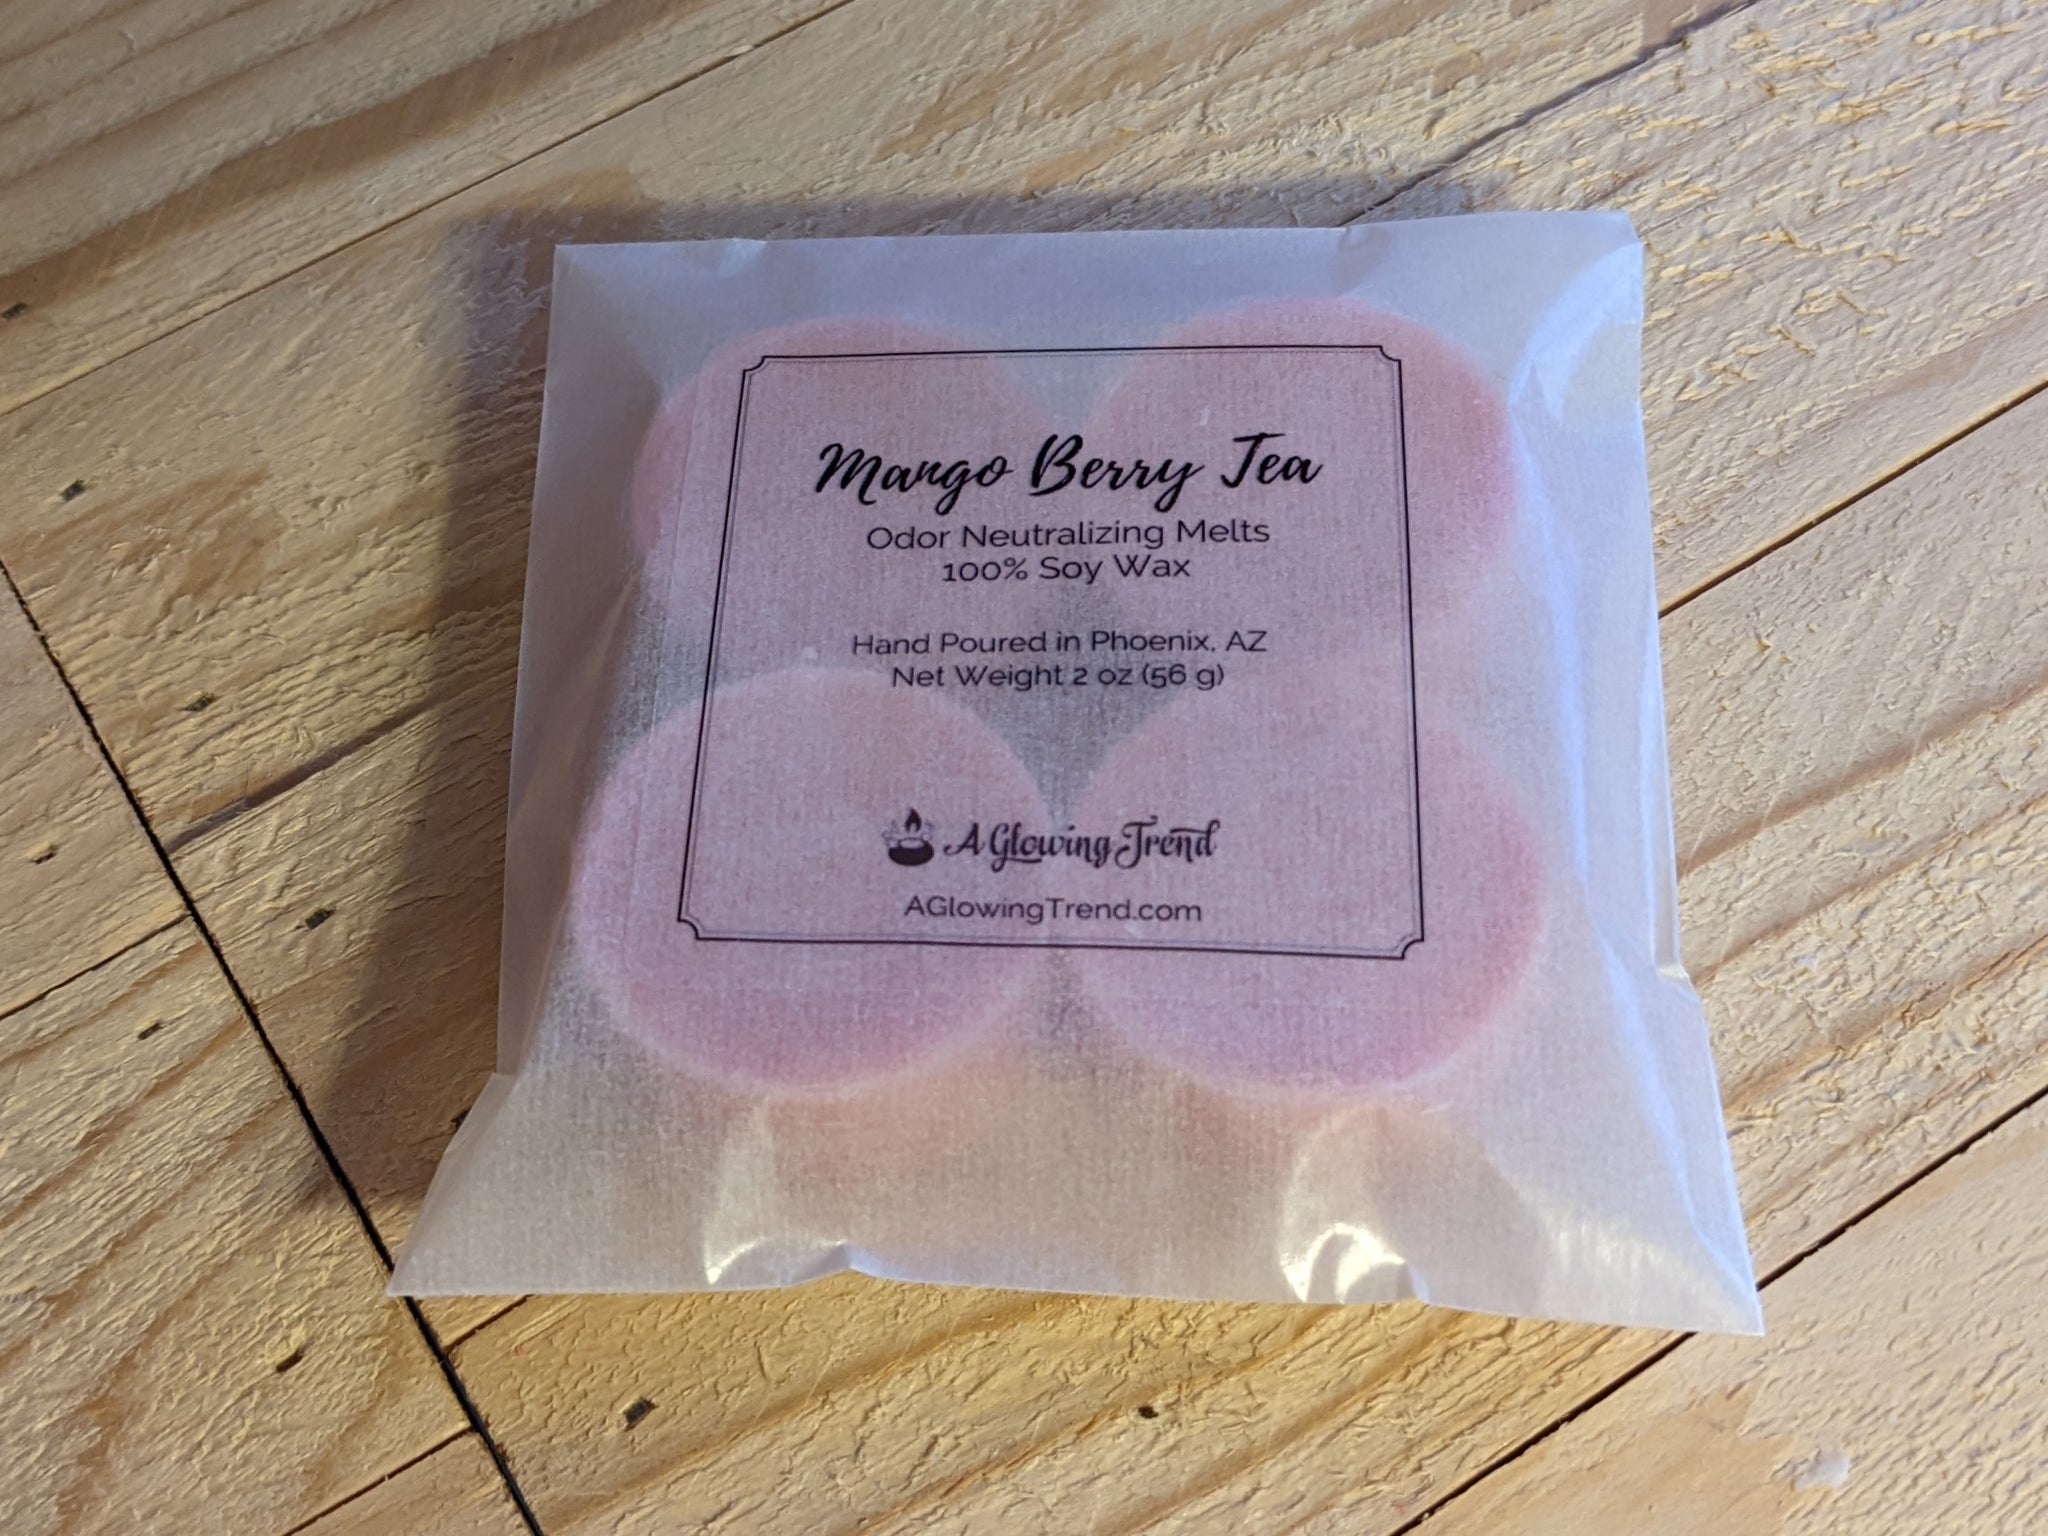 4-pack of light pink odor neutralizing Mango Berry Tea fragranced wax tart melts.